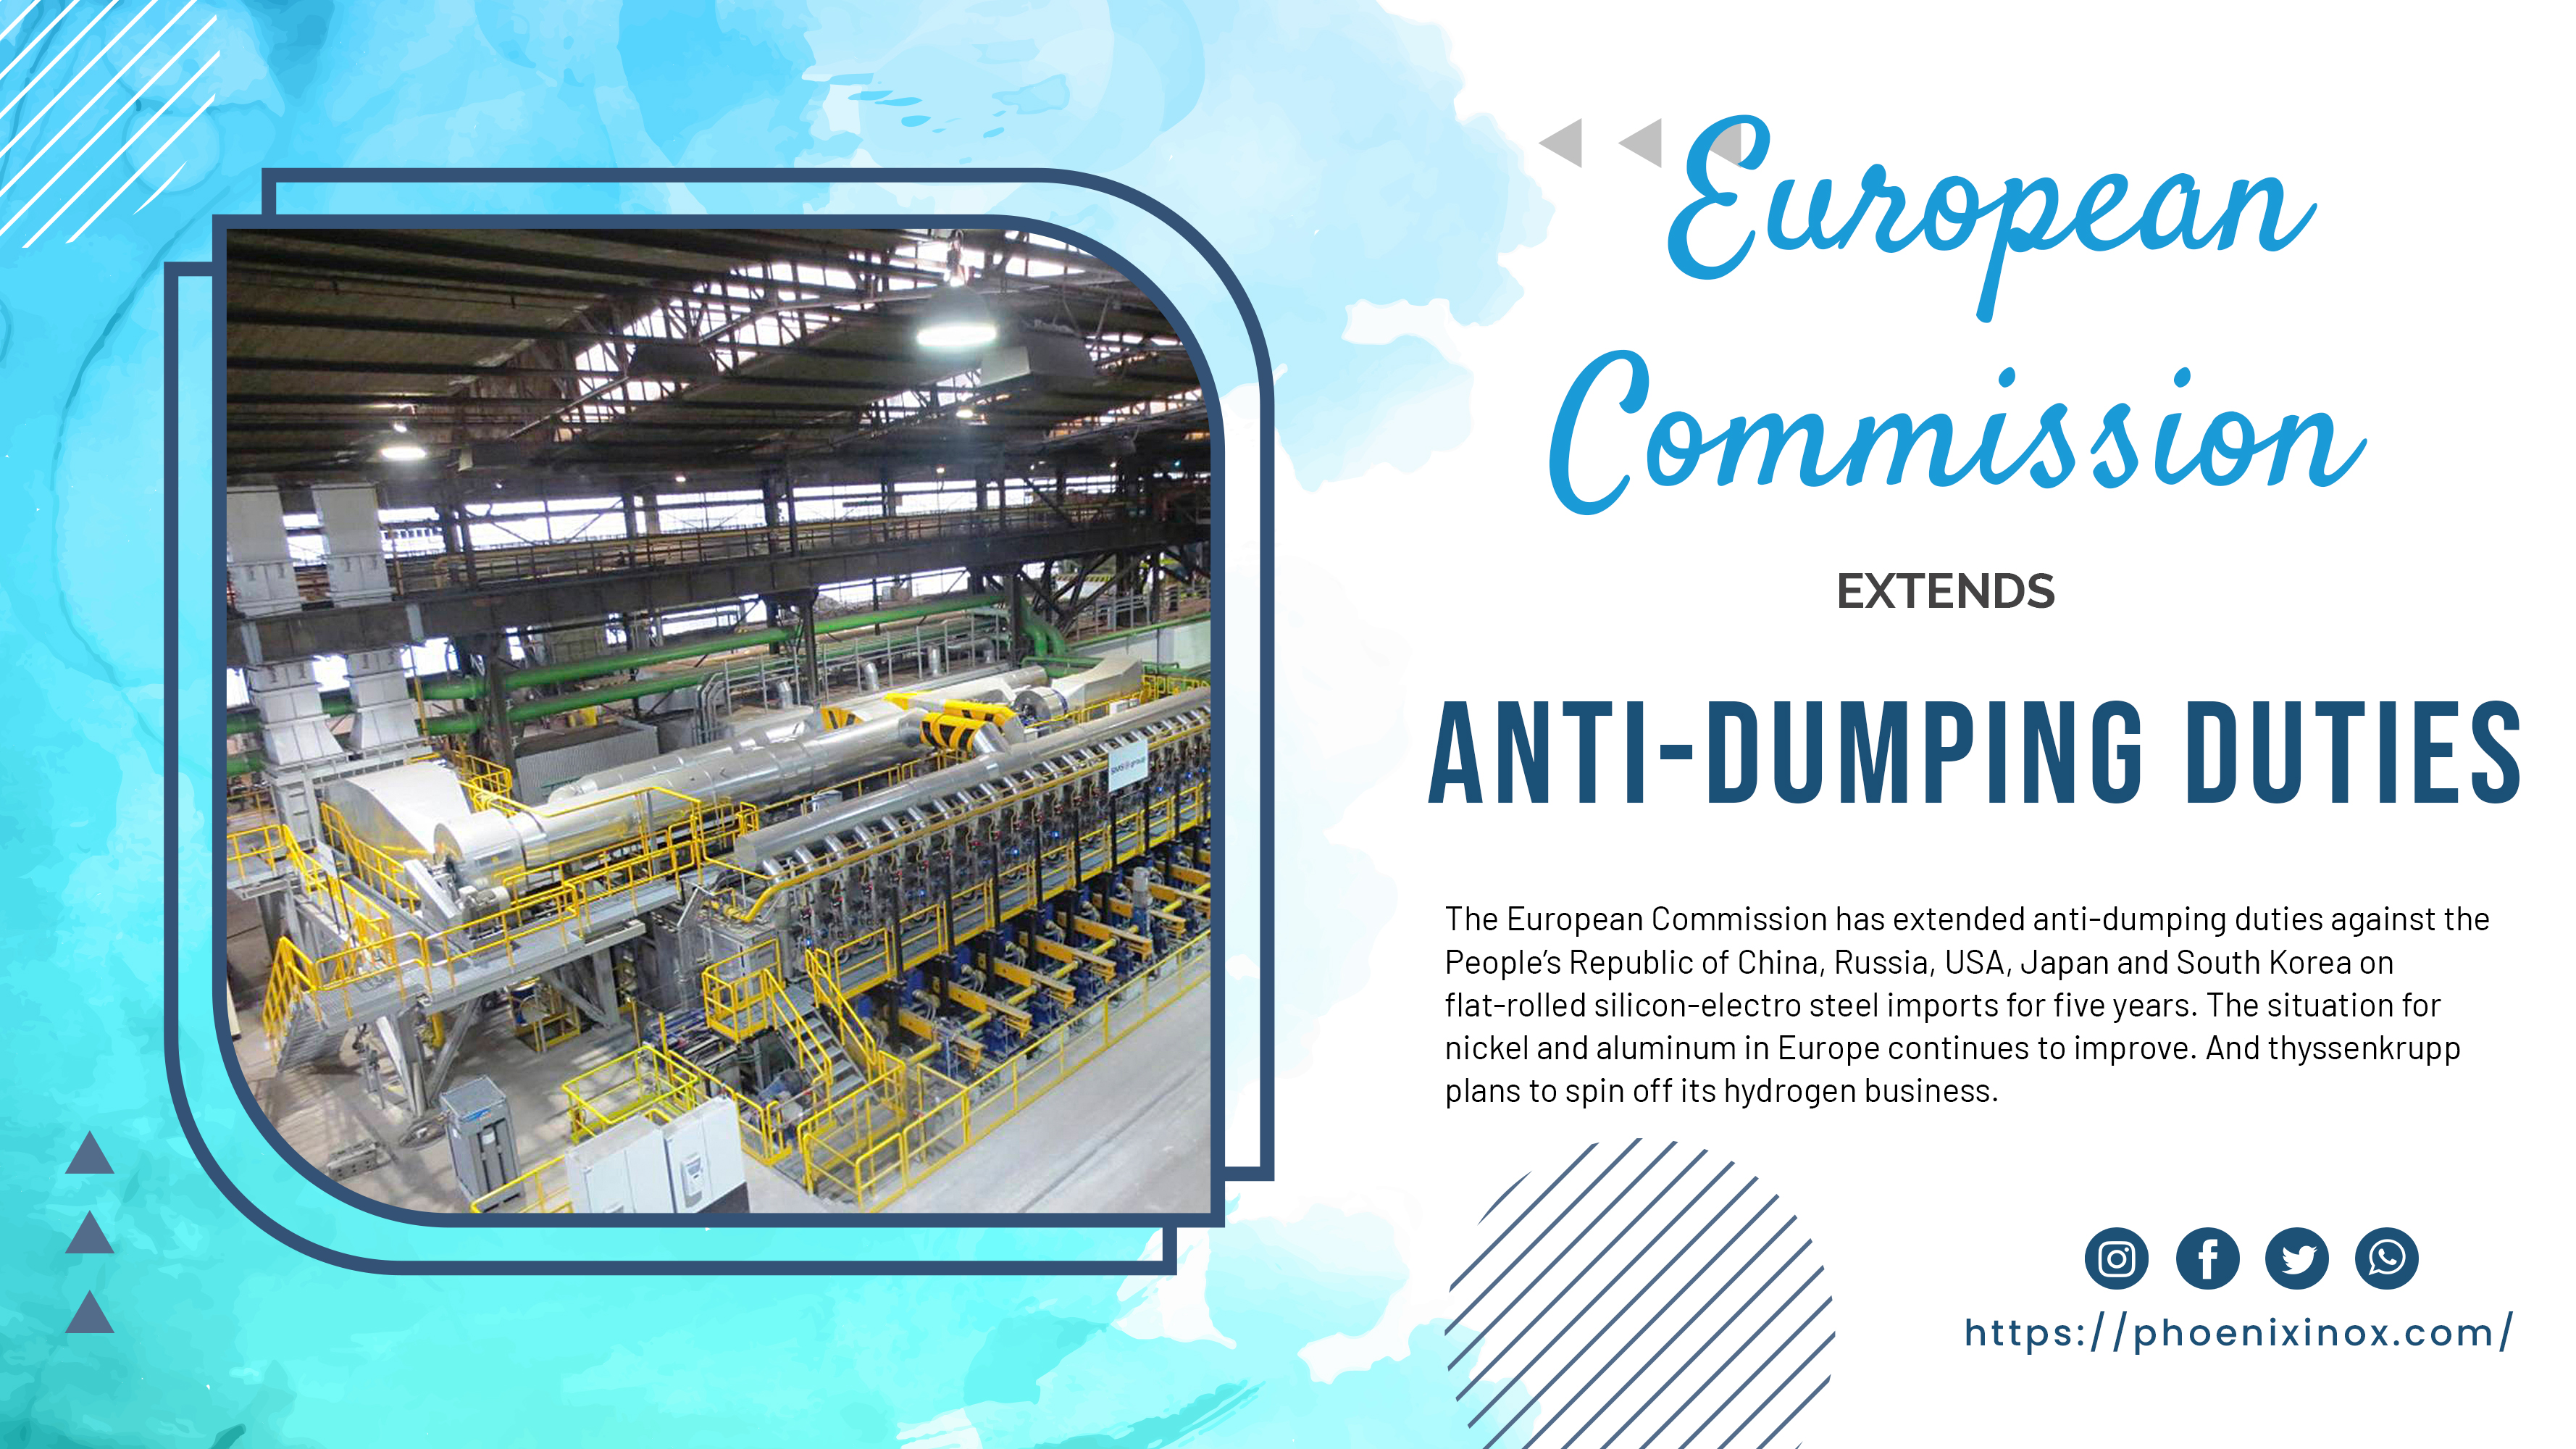 EUROPEAN COMMISSION EXTENDS ANTI-DUMPING DUTIES